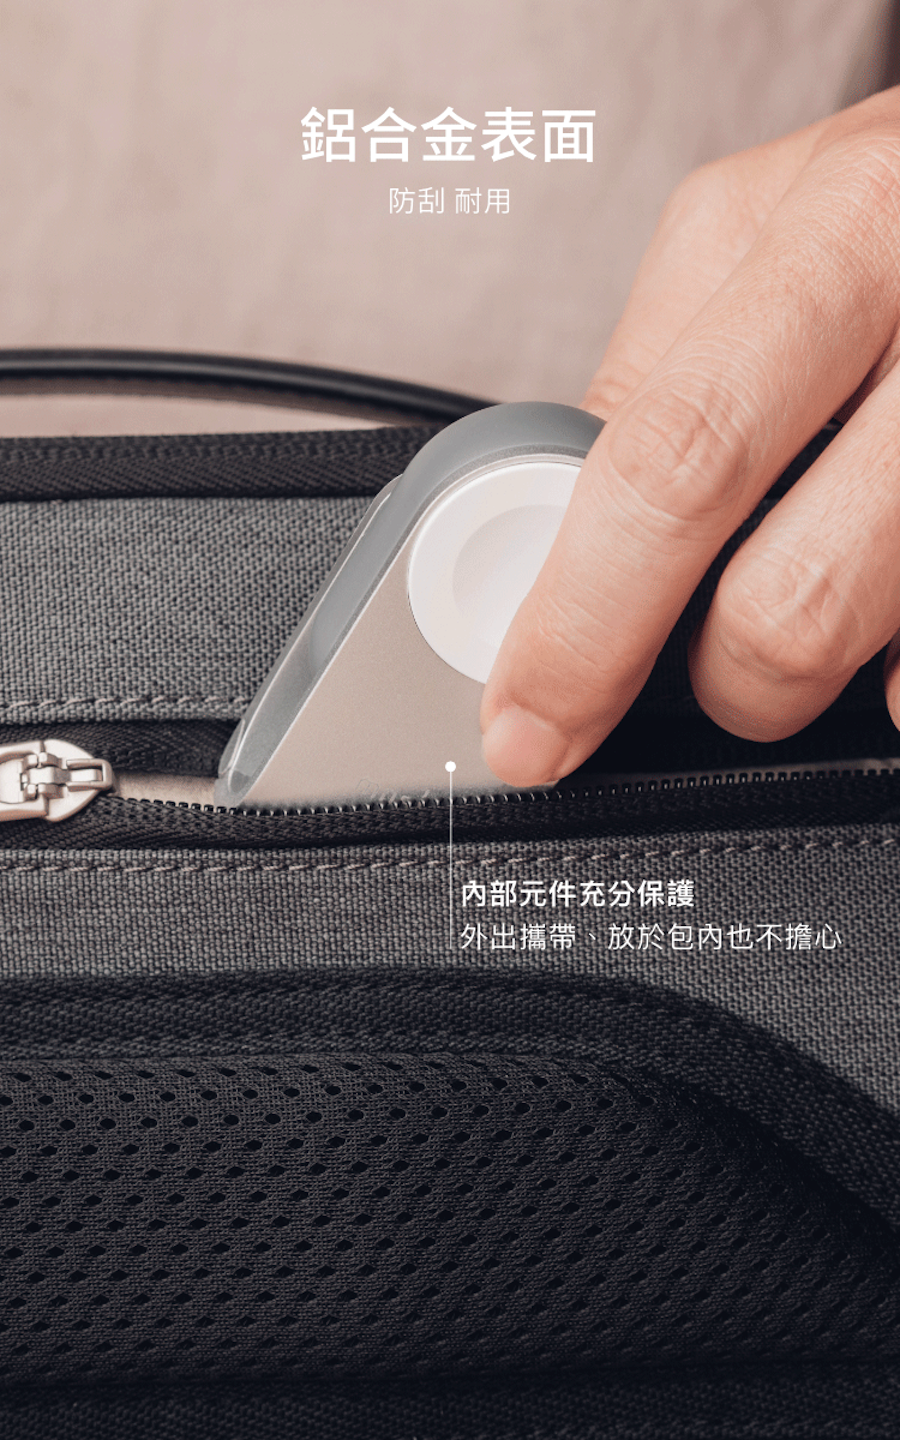 moshi  Flekto Apple Watch 折疊式隨身磁吸充電器，方便好攜帶！